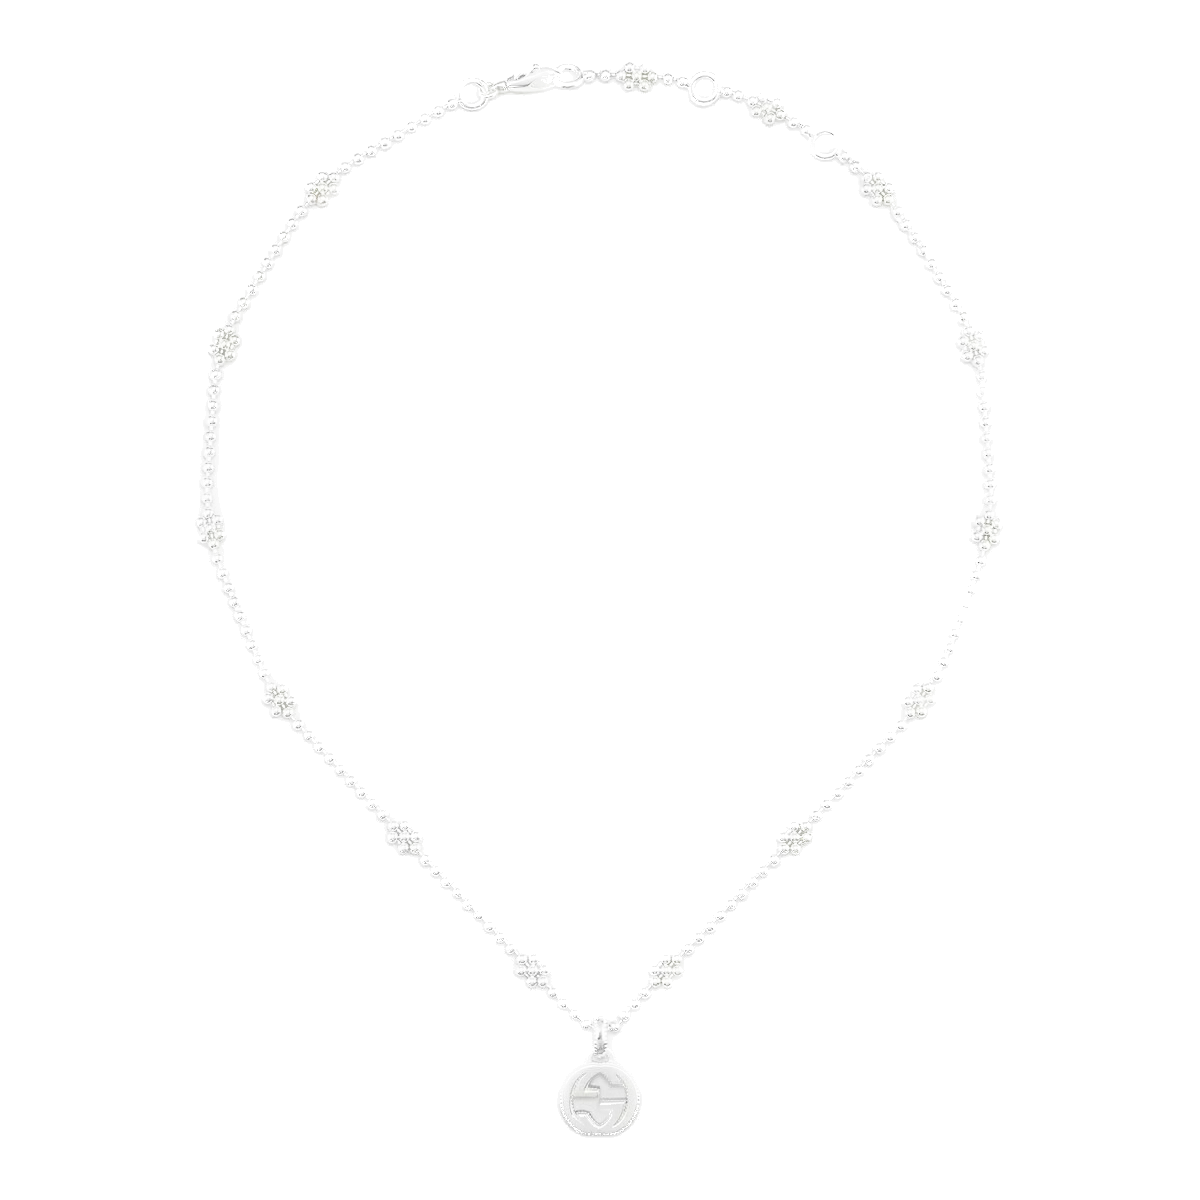 GUCCI Interlocking G necklace in silver 479221J84008106